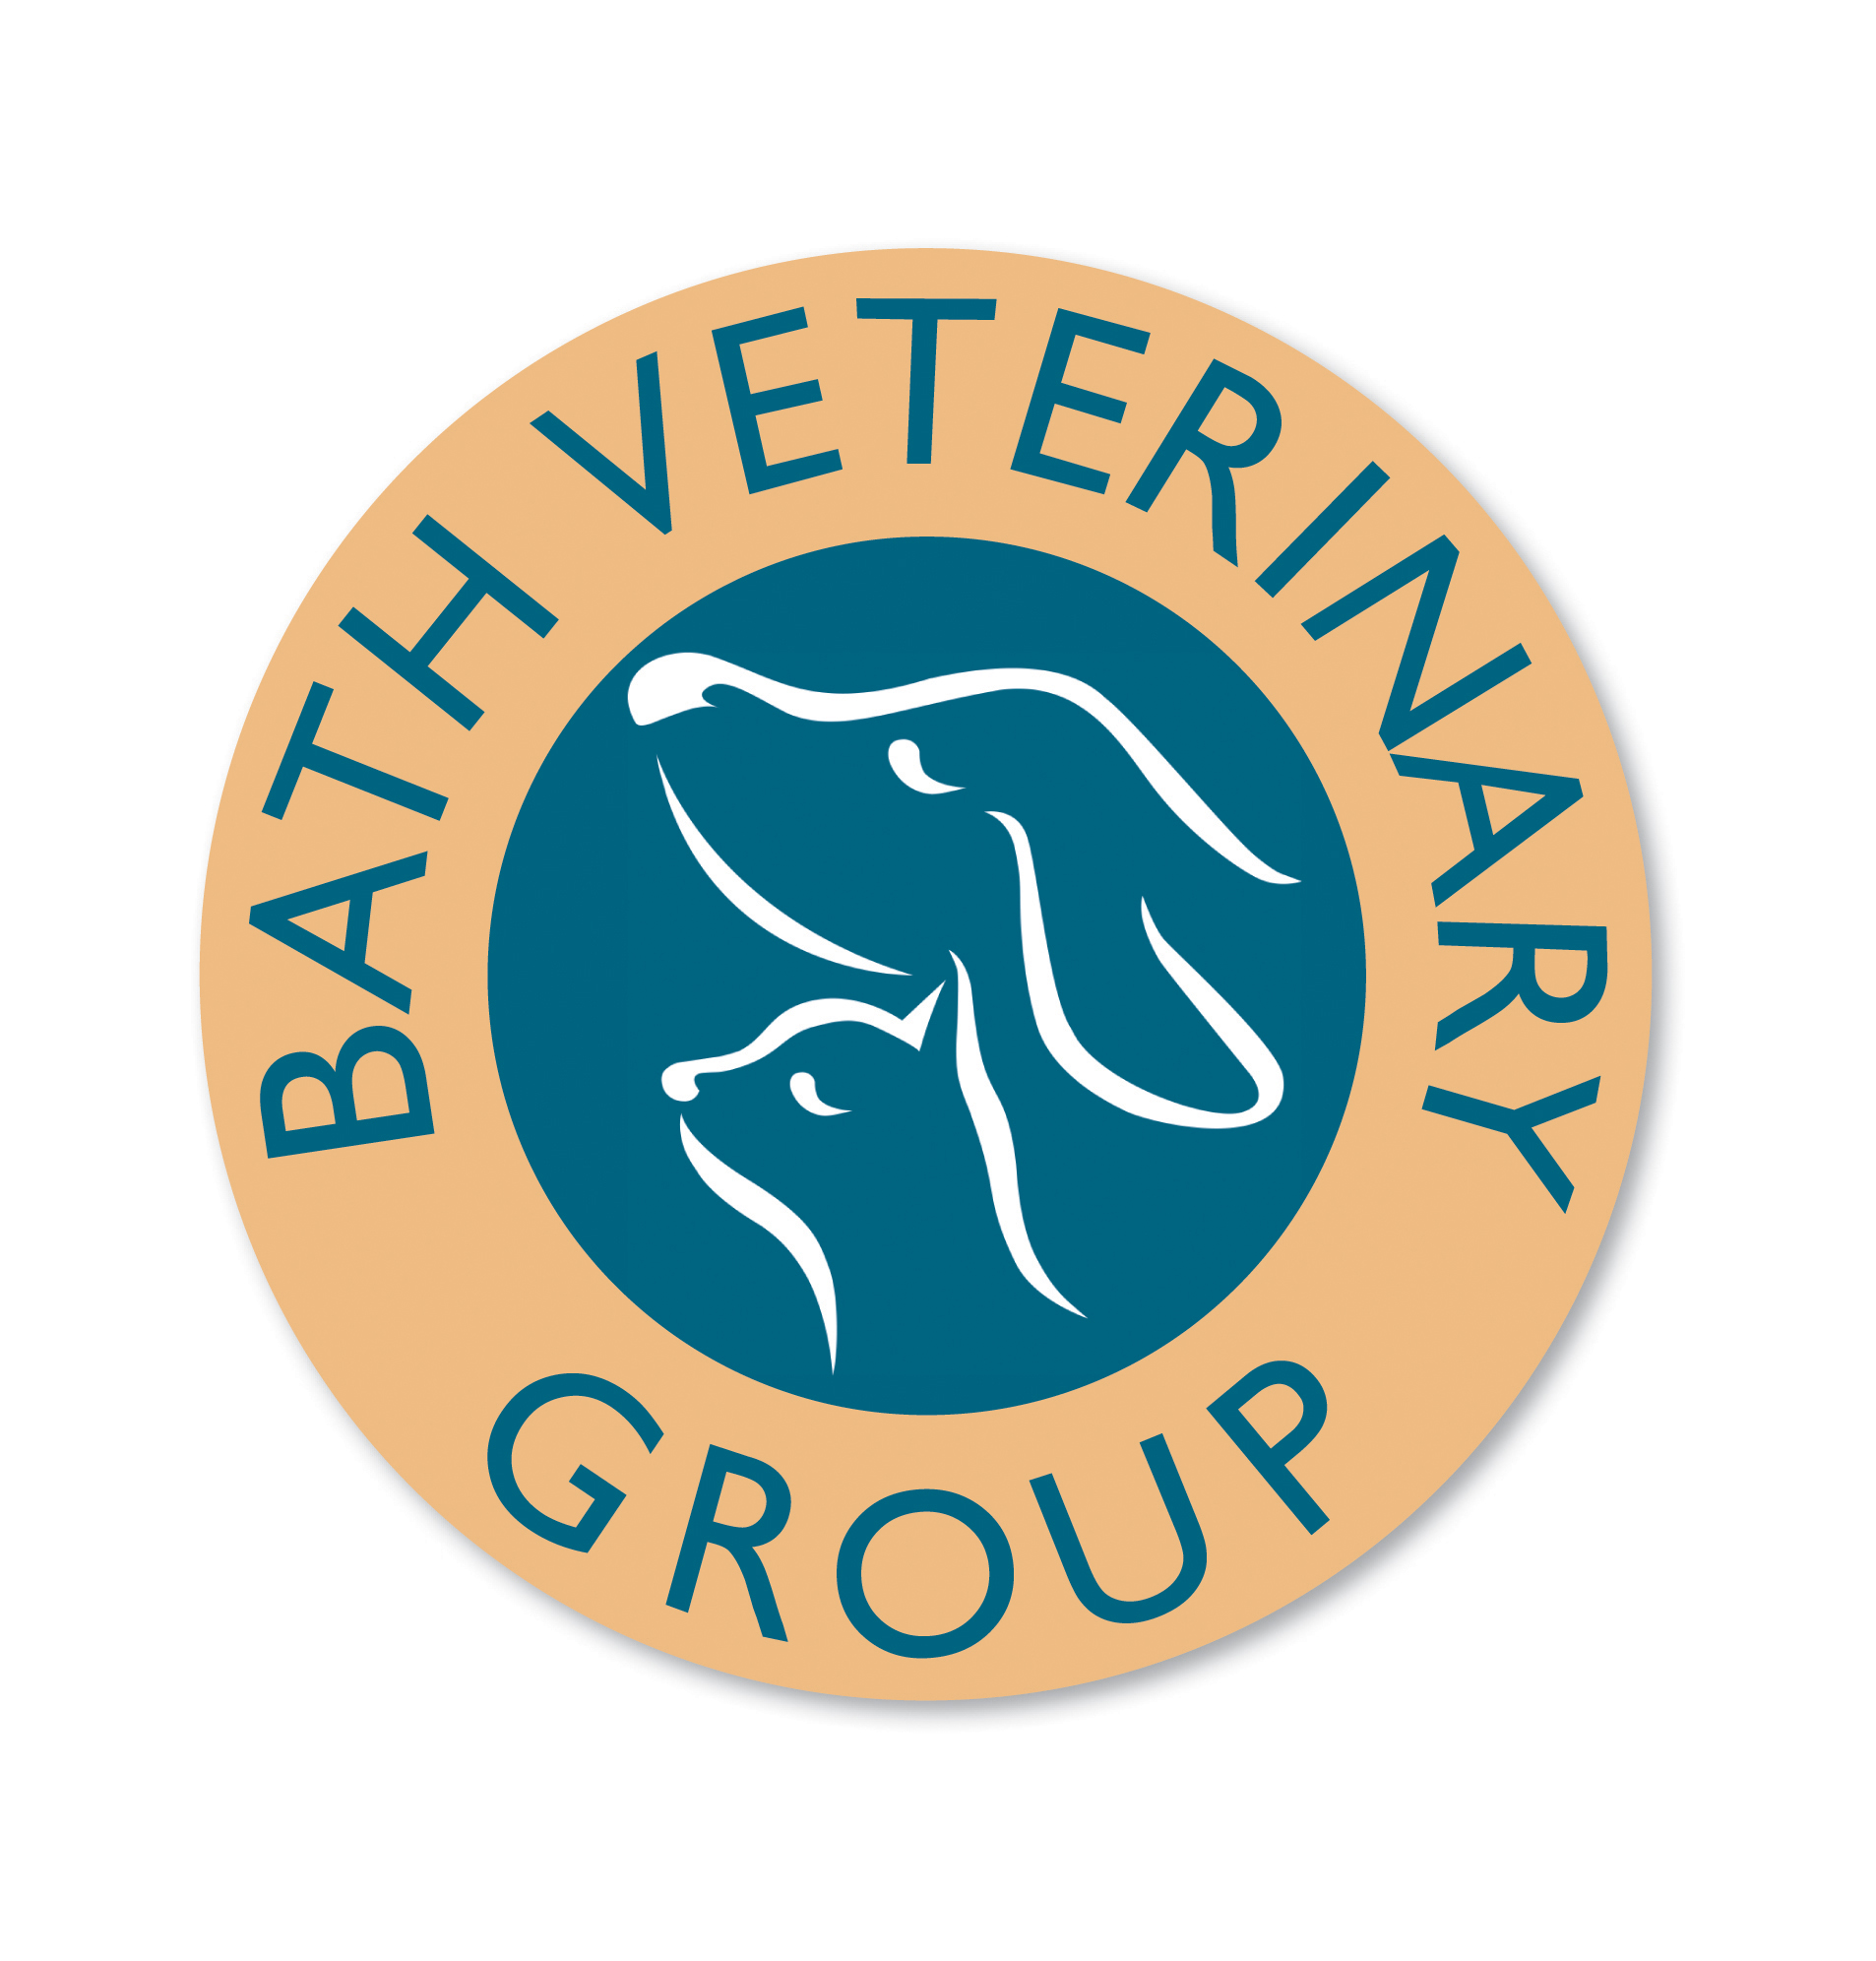 Bath Veterinary Group, Oldfield Park Surgery